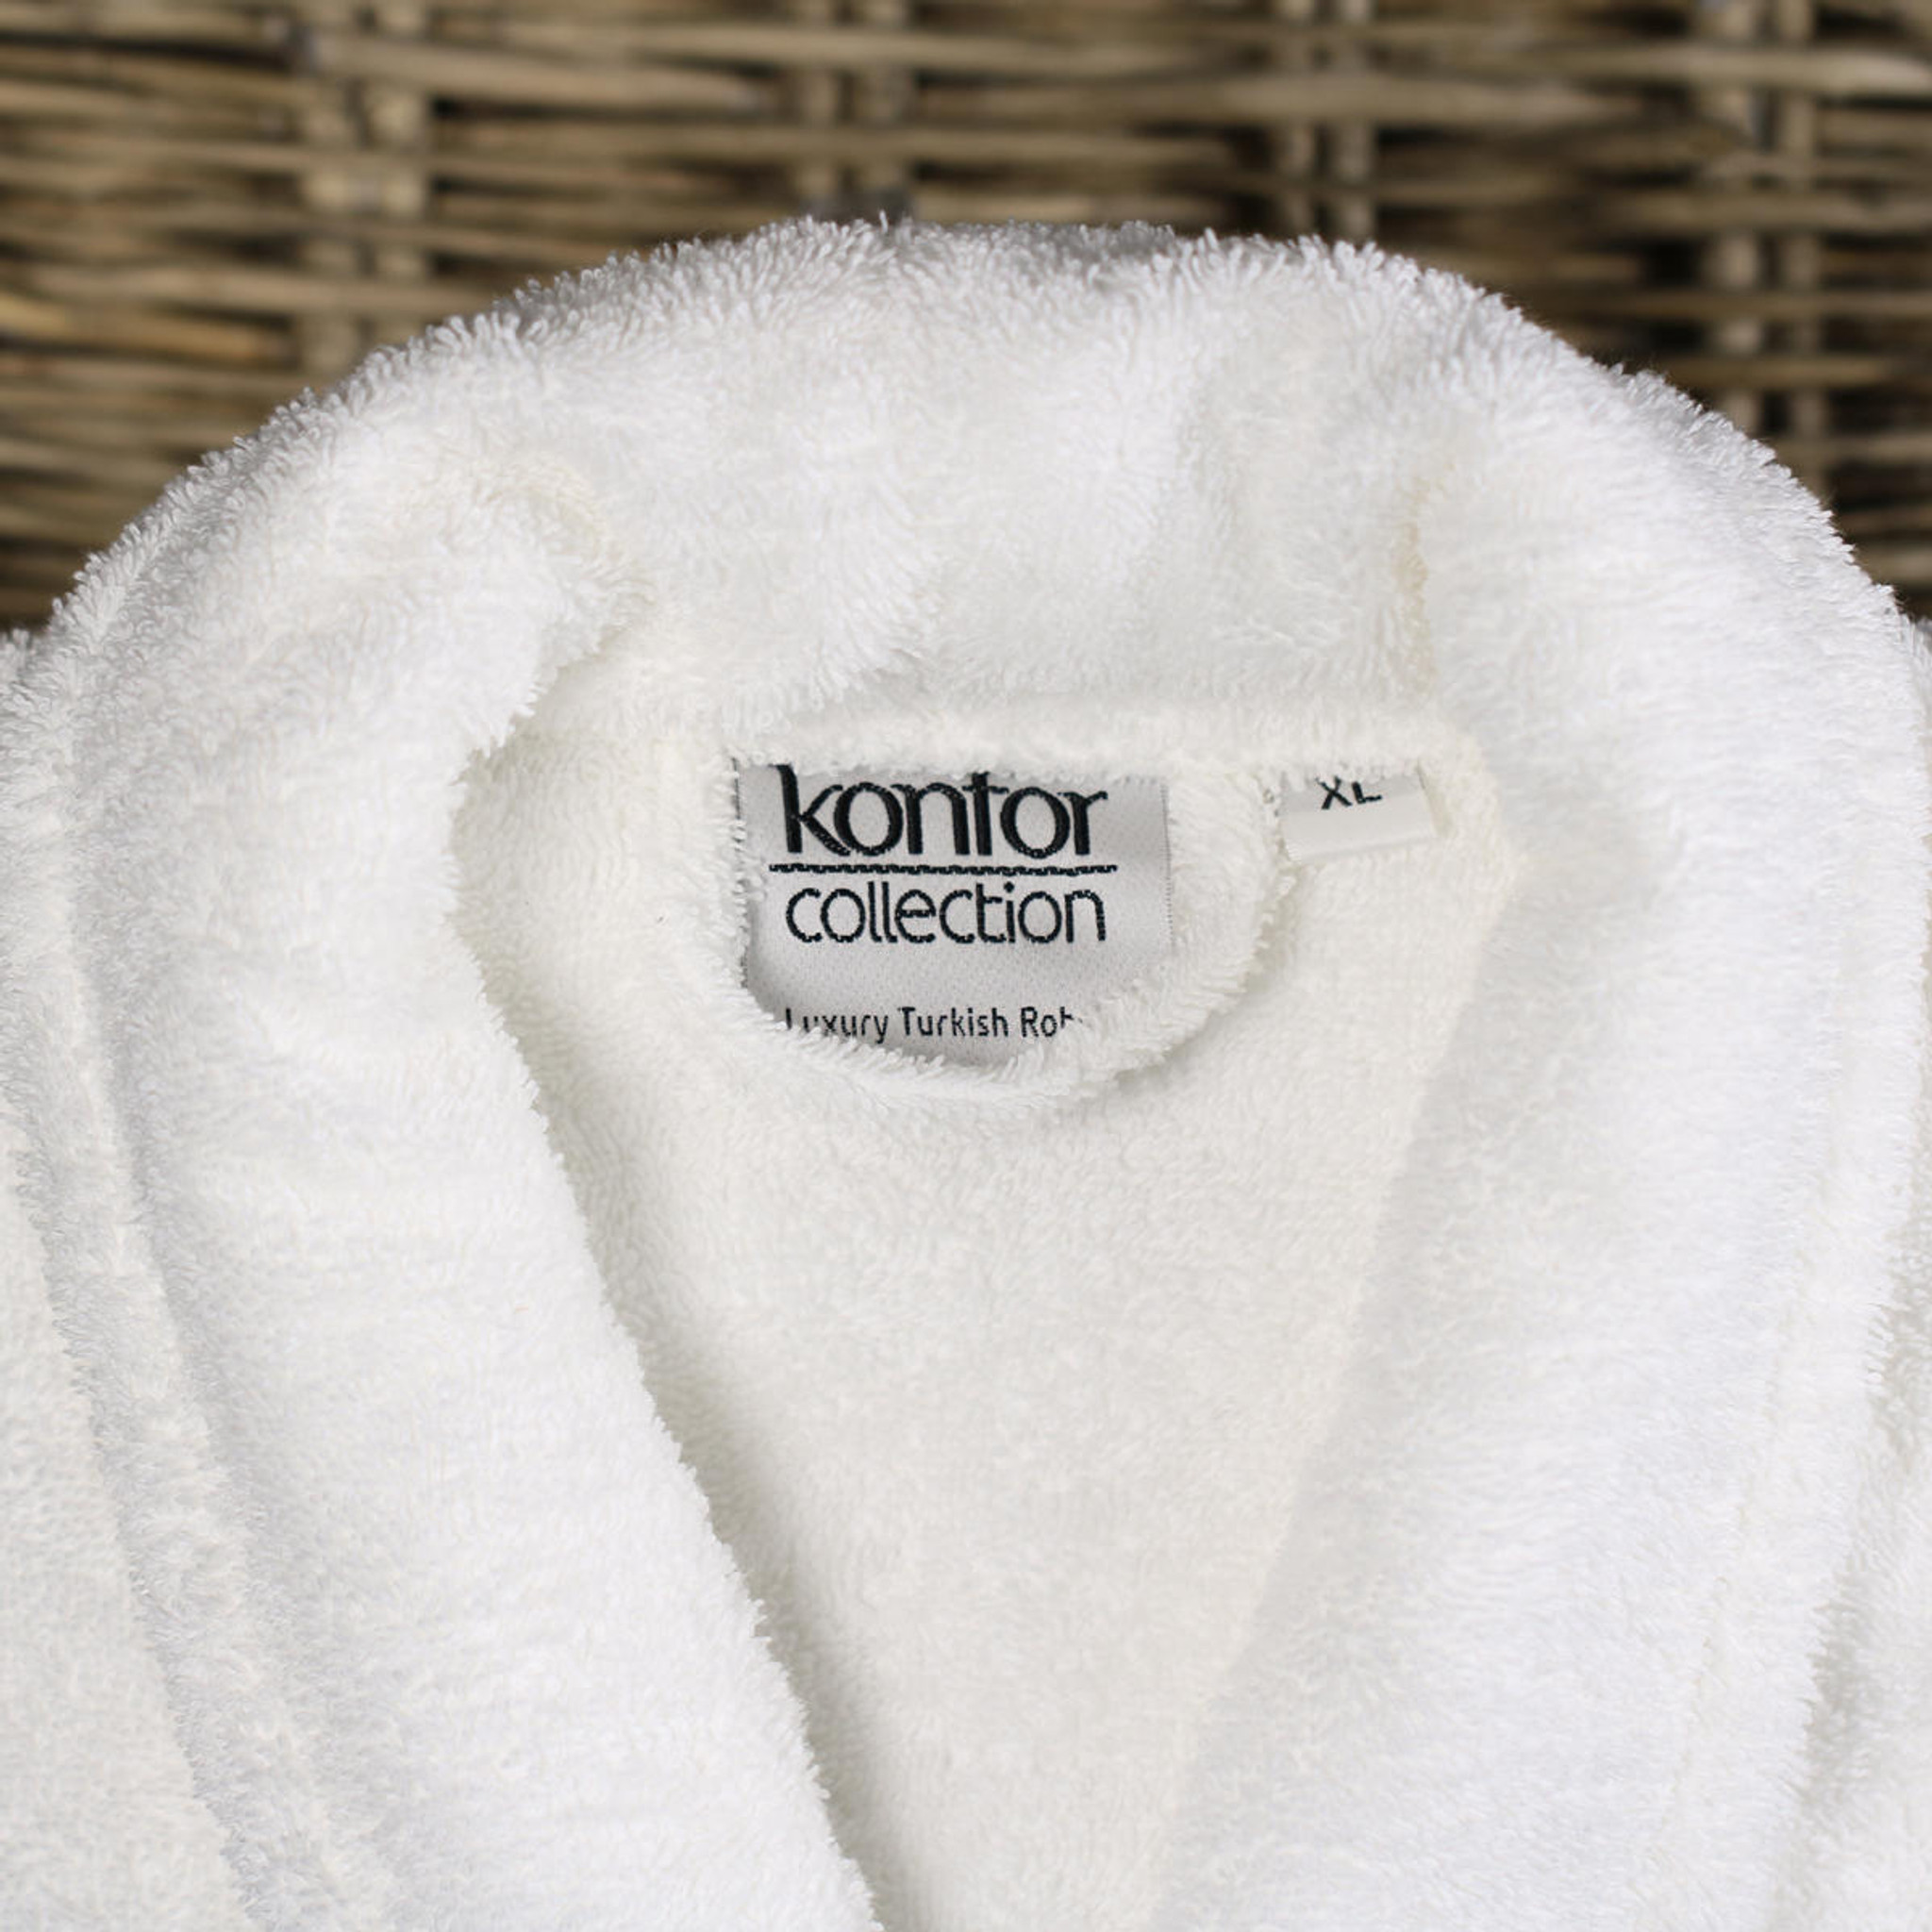 High Quality Turkish Cotton Bath Robes